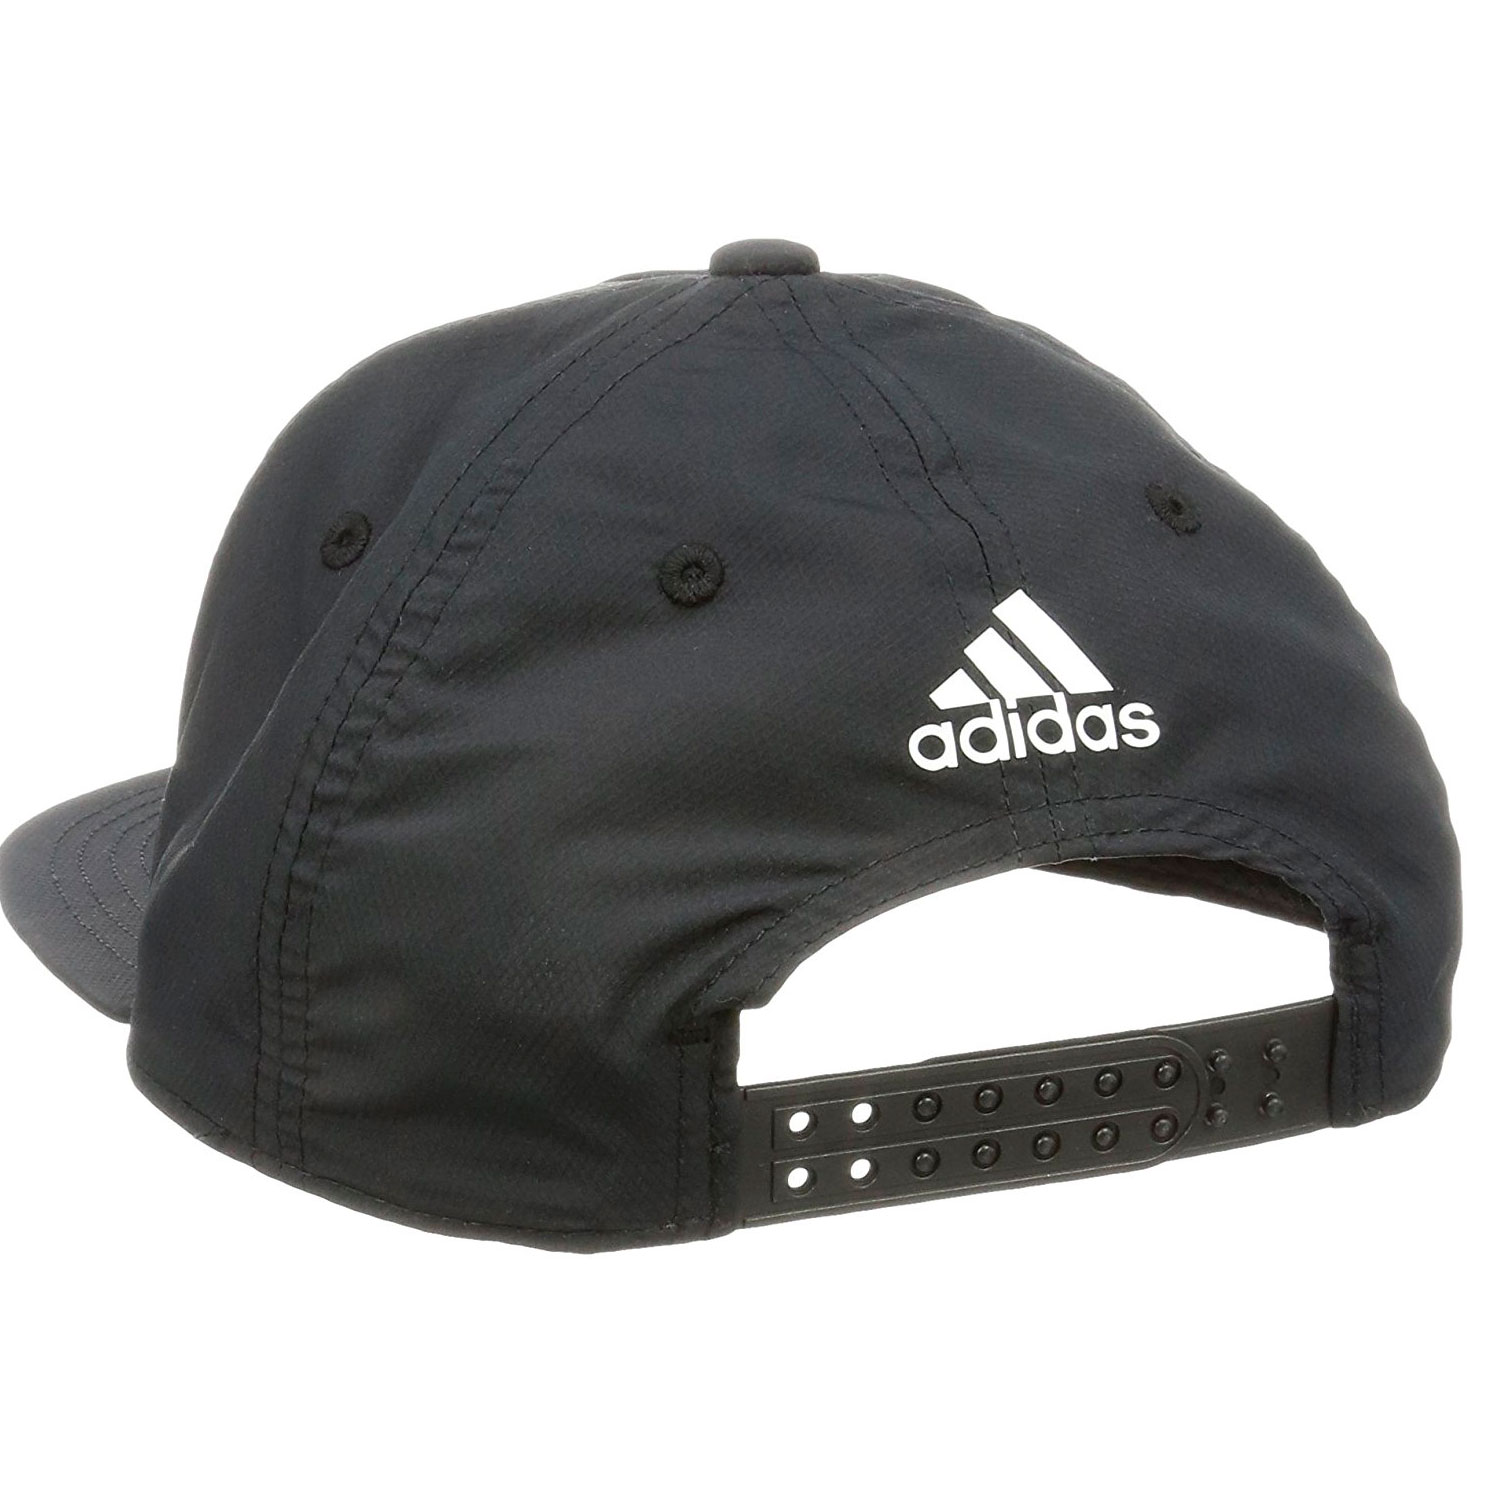  Adidas Tango FLAT CAP S99018